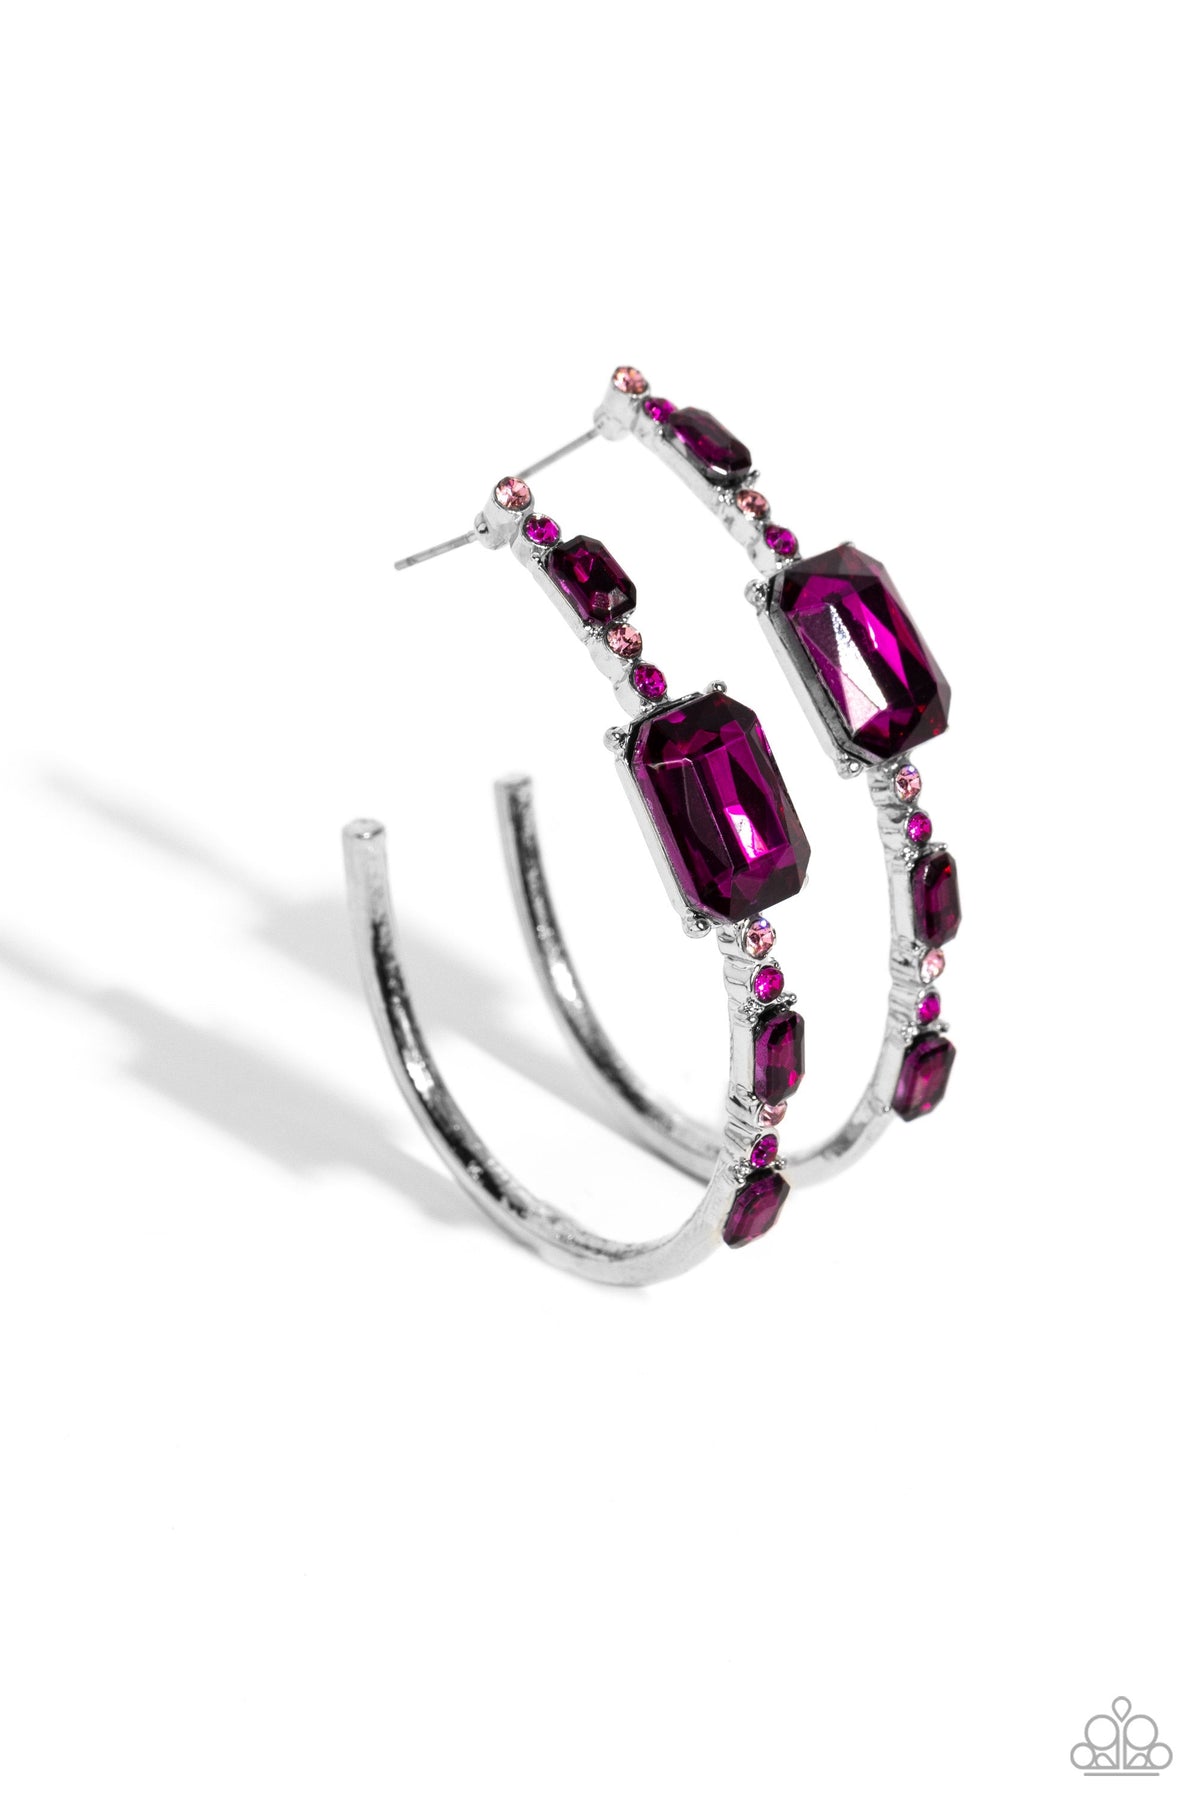 Elite Ensemble Pink Rhinestone Hoop Earrings - Paparazzi Accessories- lightbox - CarasShop.com - $5 Jewelry by Cara Jewels